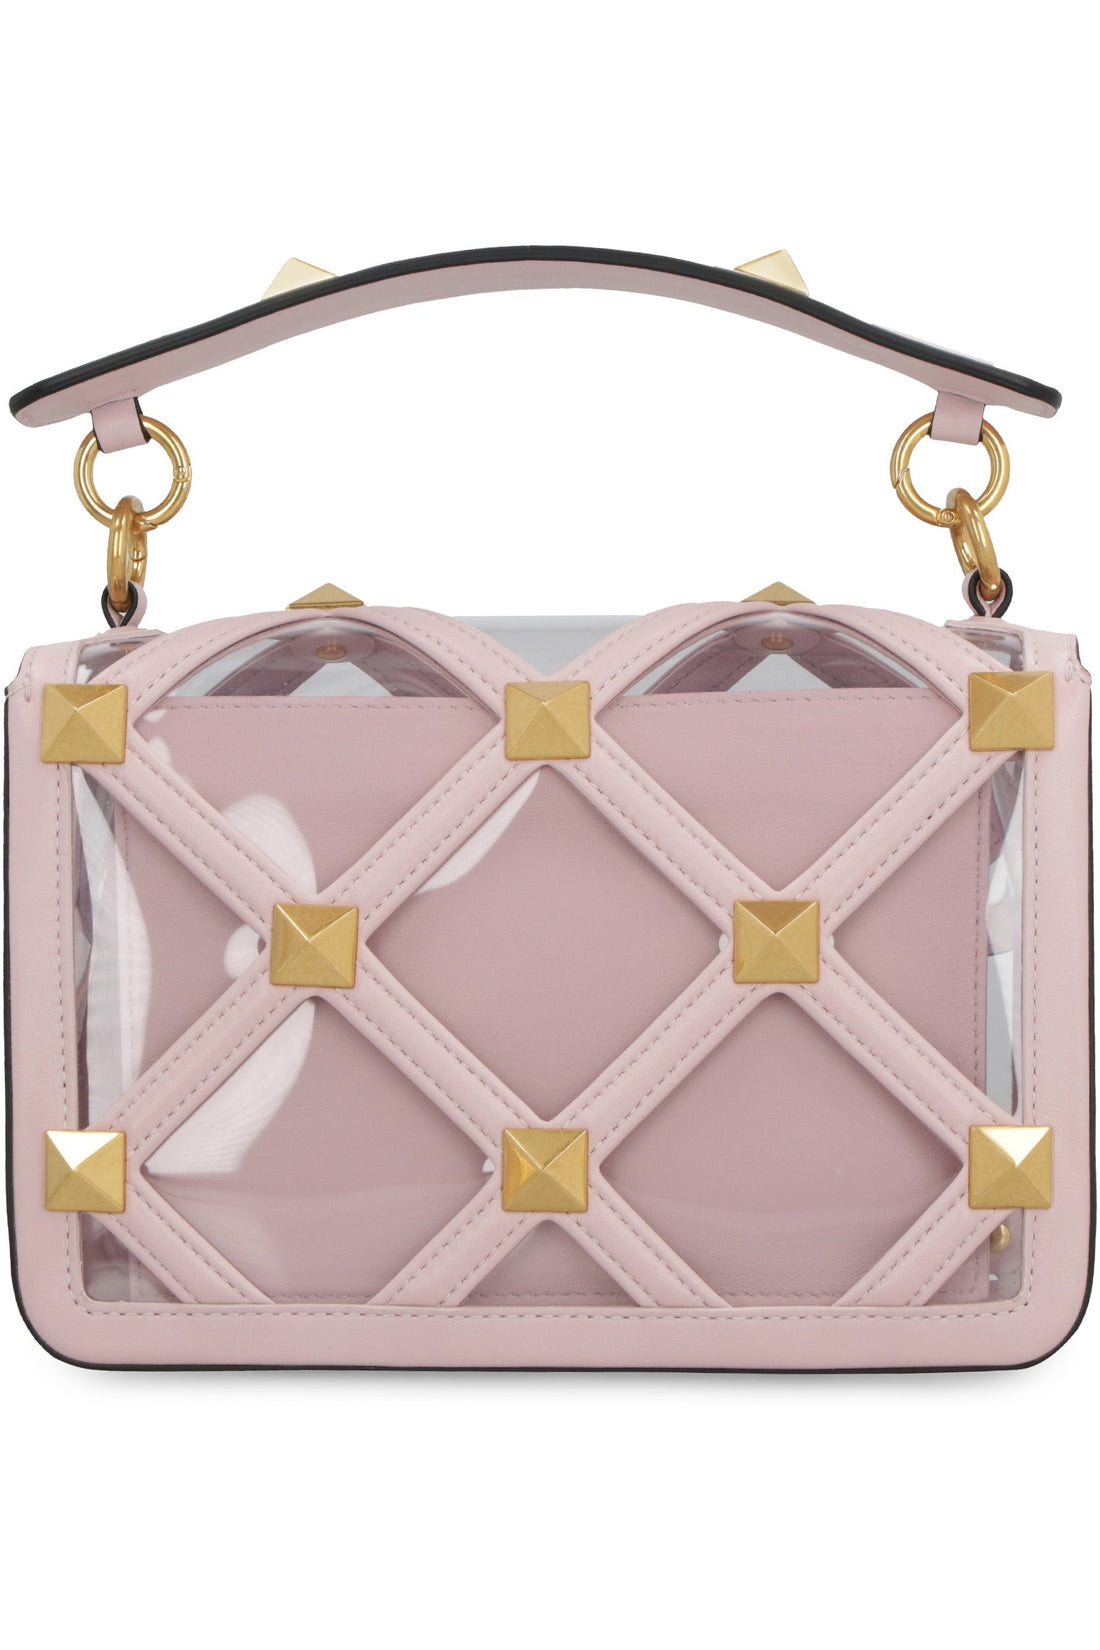 Valentino-OUTLET-SALE-Roman Stud PVC handbag-ARCHIVIST